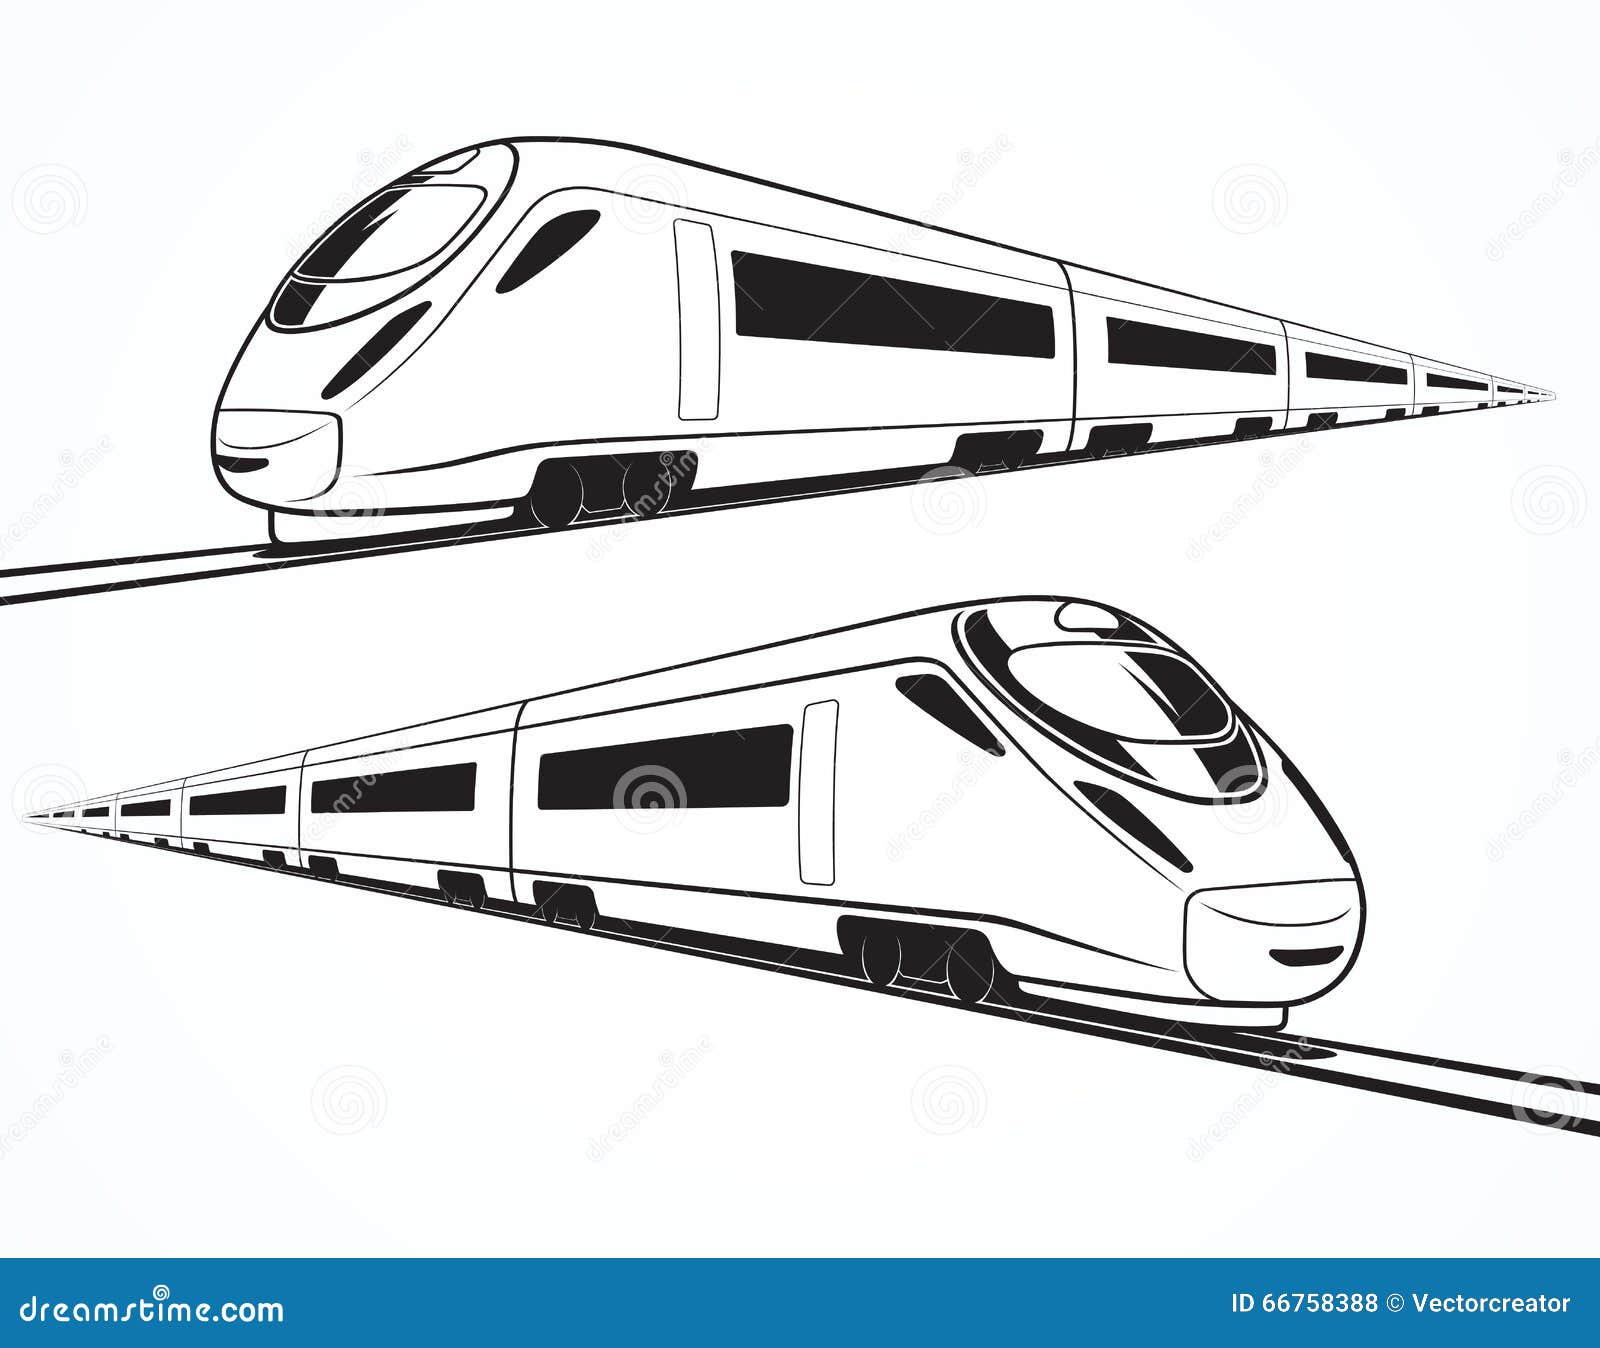 How to draw Delhi Metro Subway Train at Station #art #artforall  #arttutorial #easydrawing - YouTube